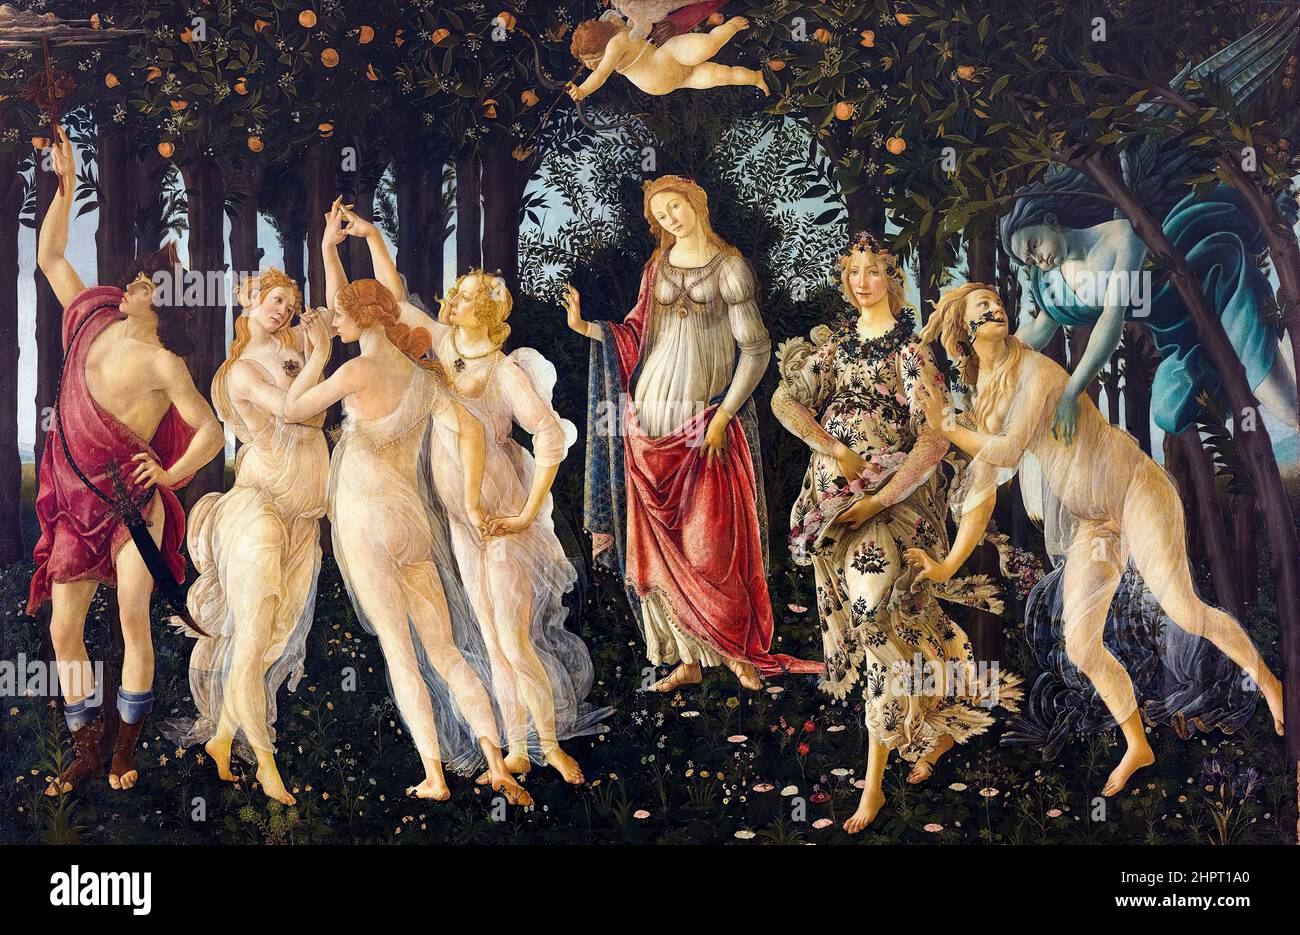 Sandro Botticelli, Primavera (Spring), Renaissance painting, circa 1480 Stock Photo